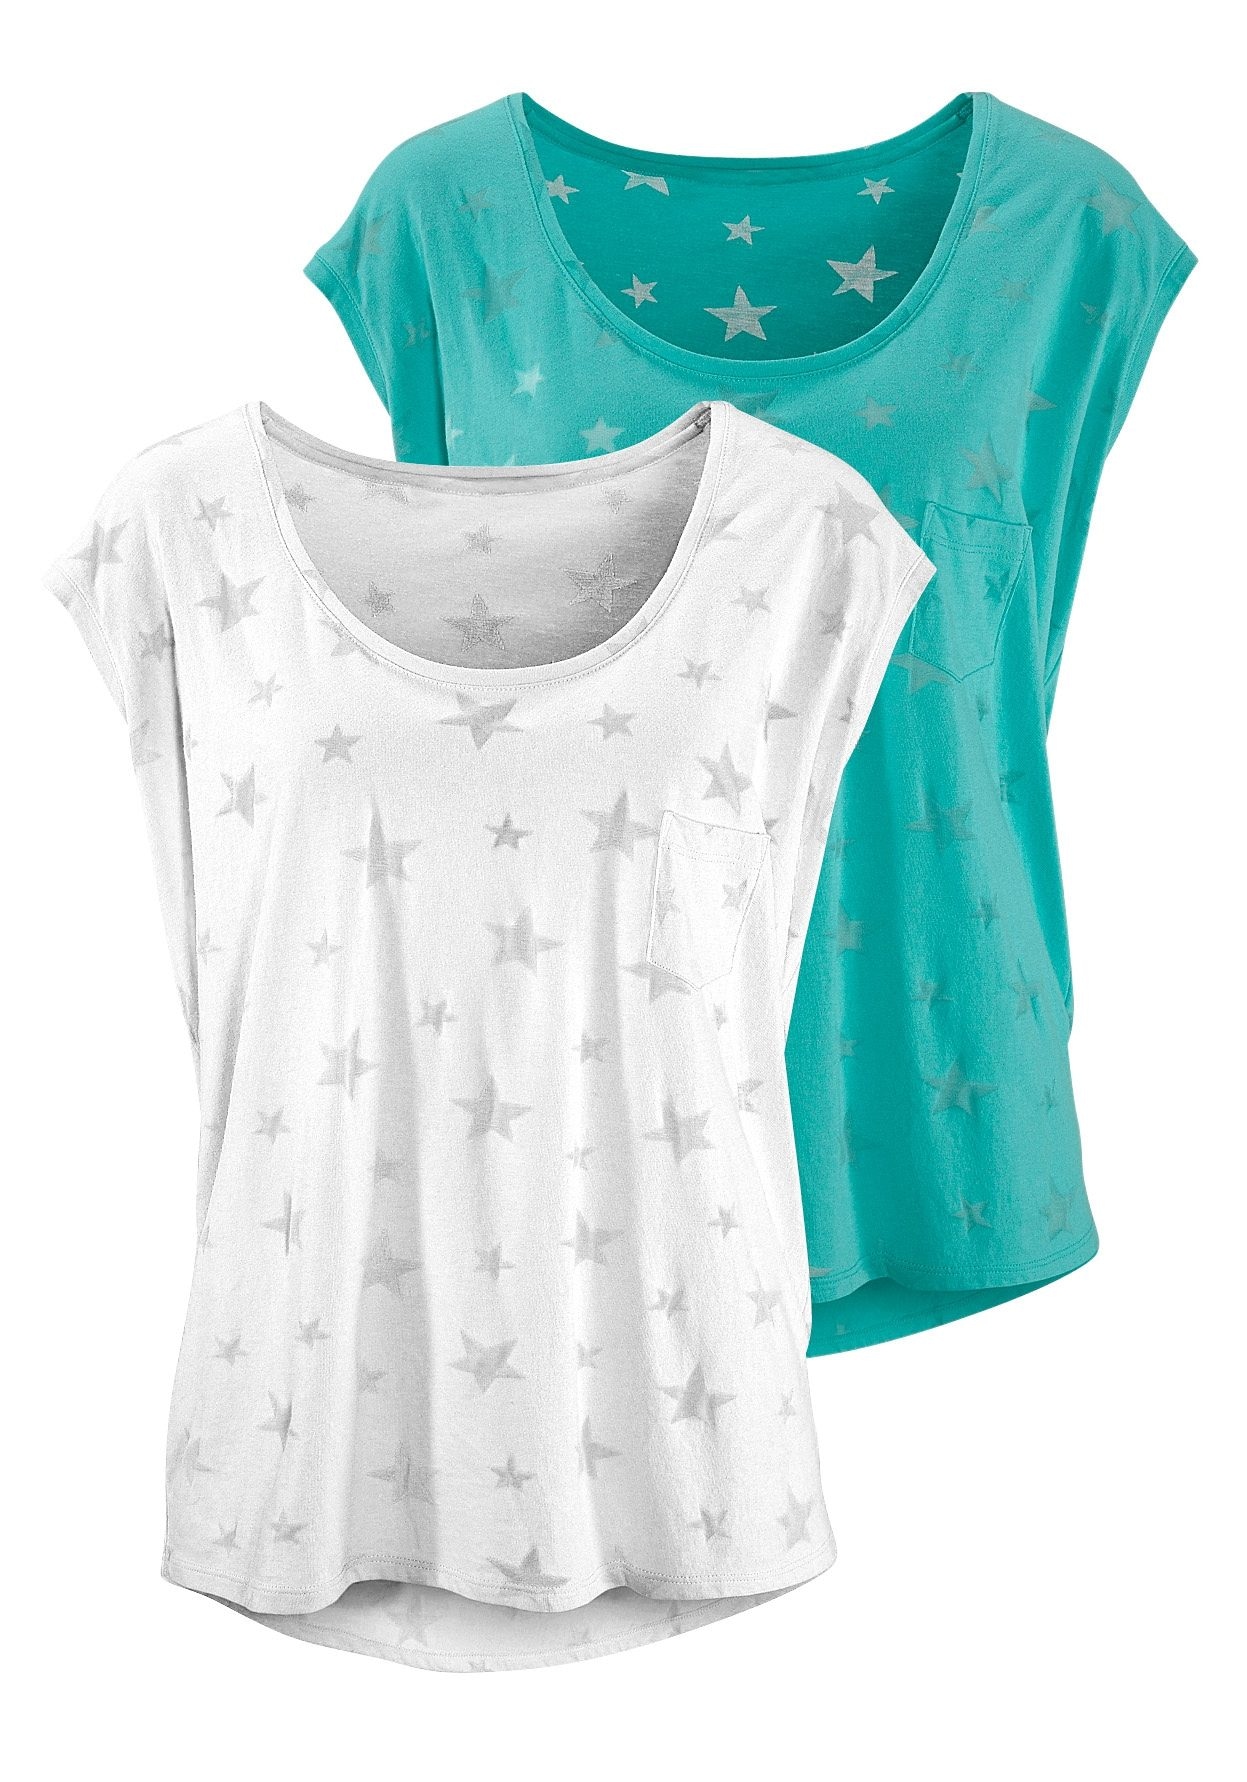 Sternen bestellen (2er-Pack), im leicht Beachtime mit transparenten Online-Shop Ausbrenner-Qualität T-Shirt,